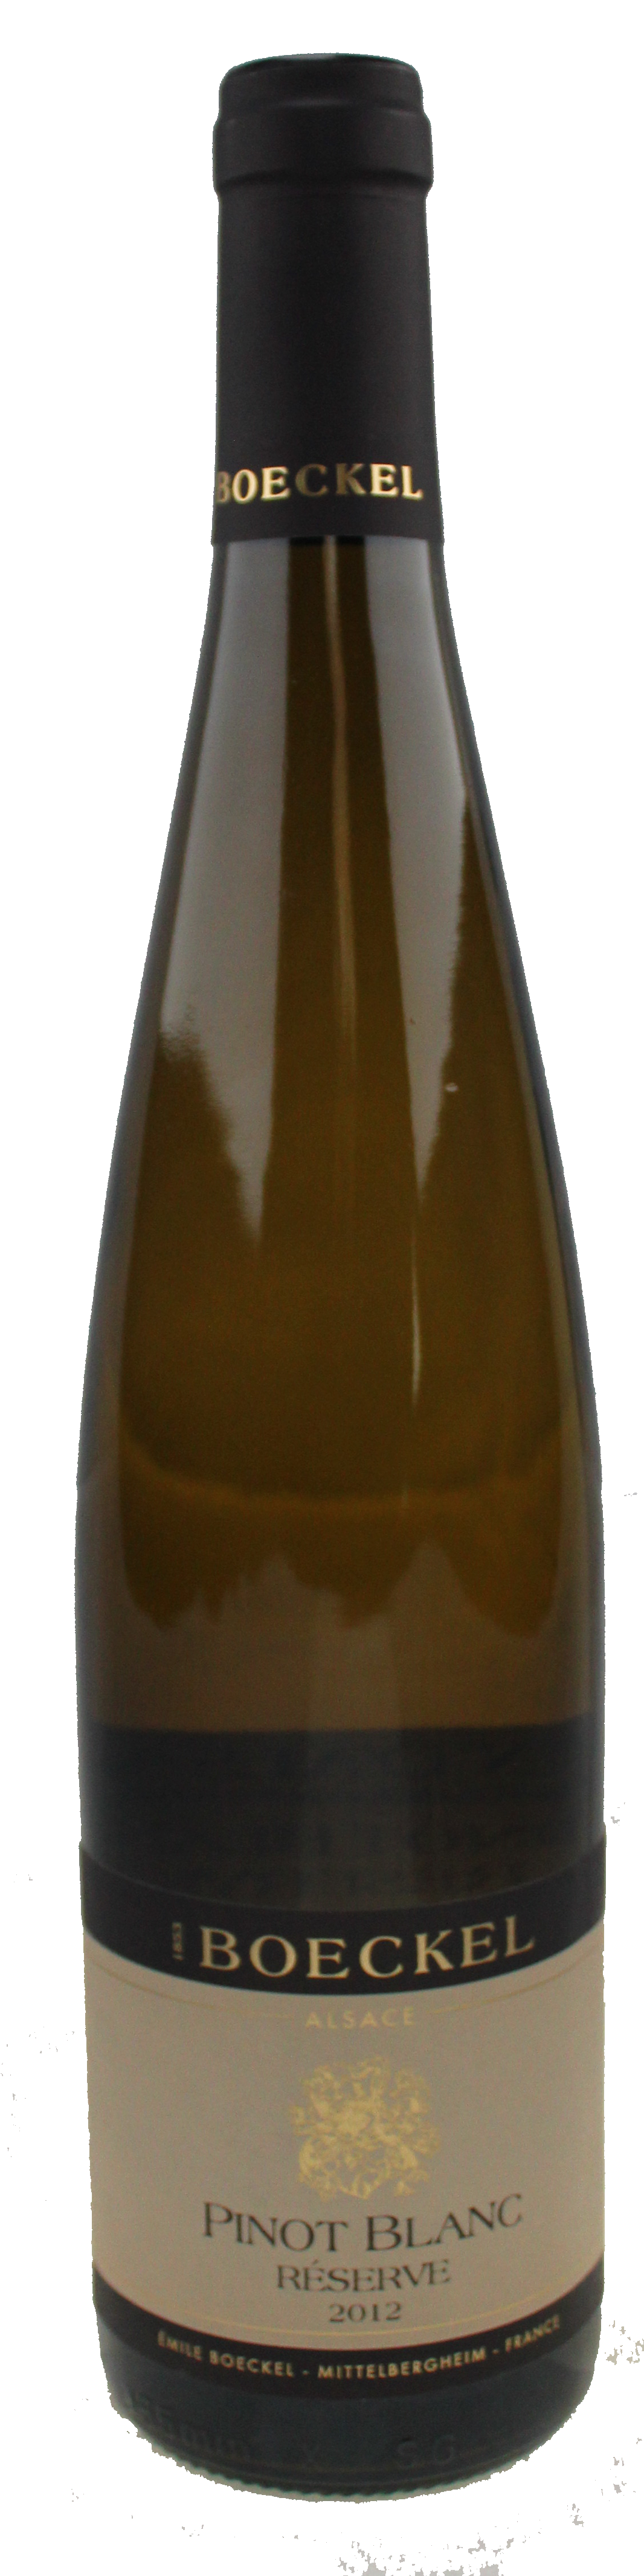 Bottle shot of 2012 Pinot Blanc Reserve